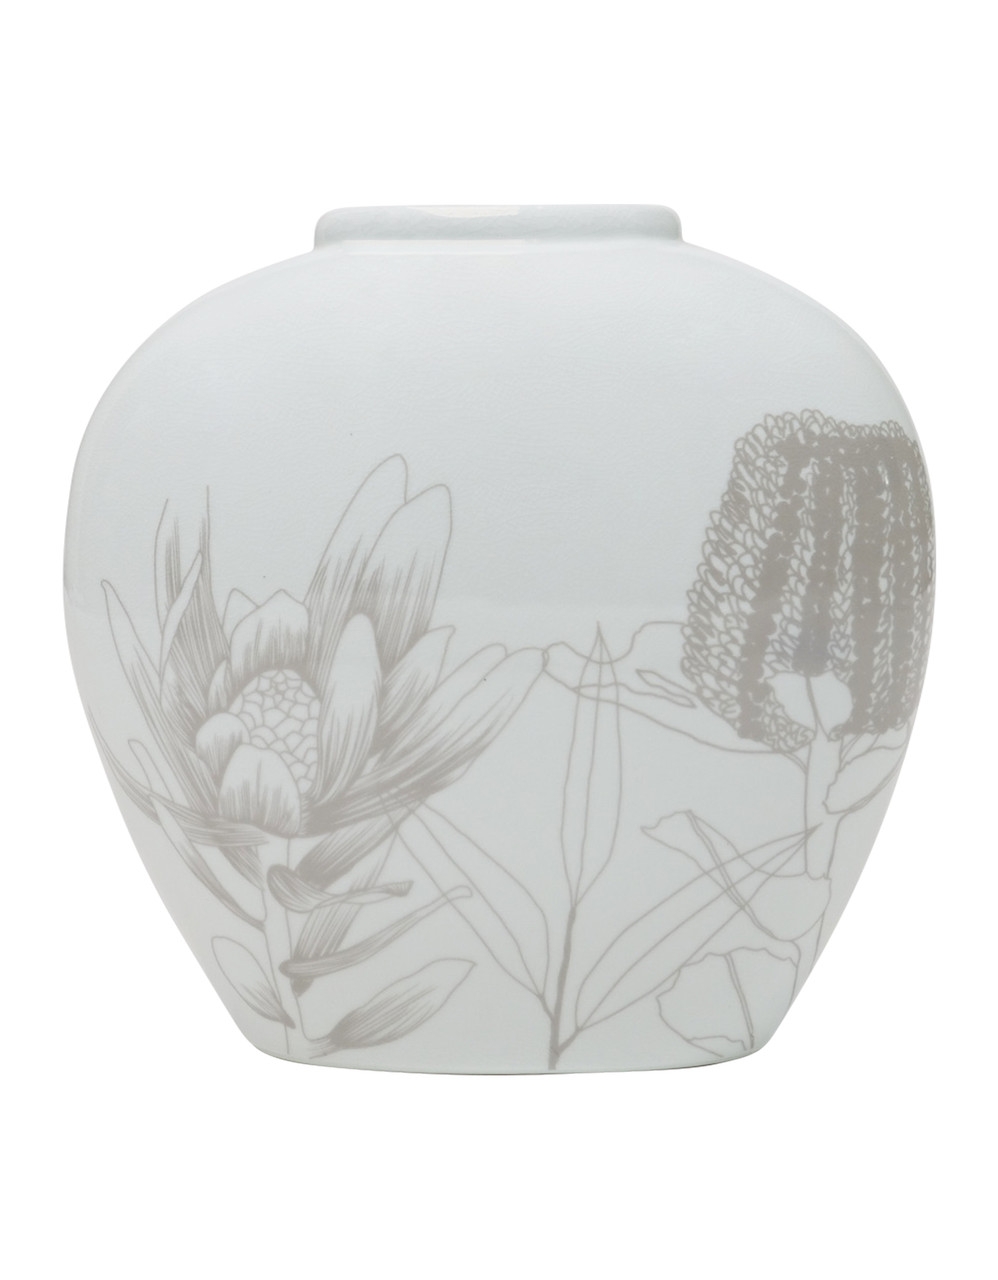 Mindy Brownes Serene White Ornamental Vase